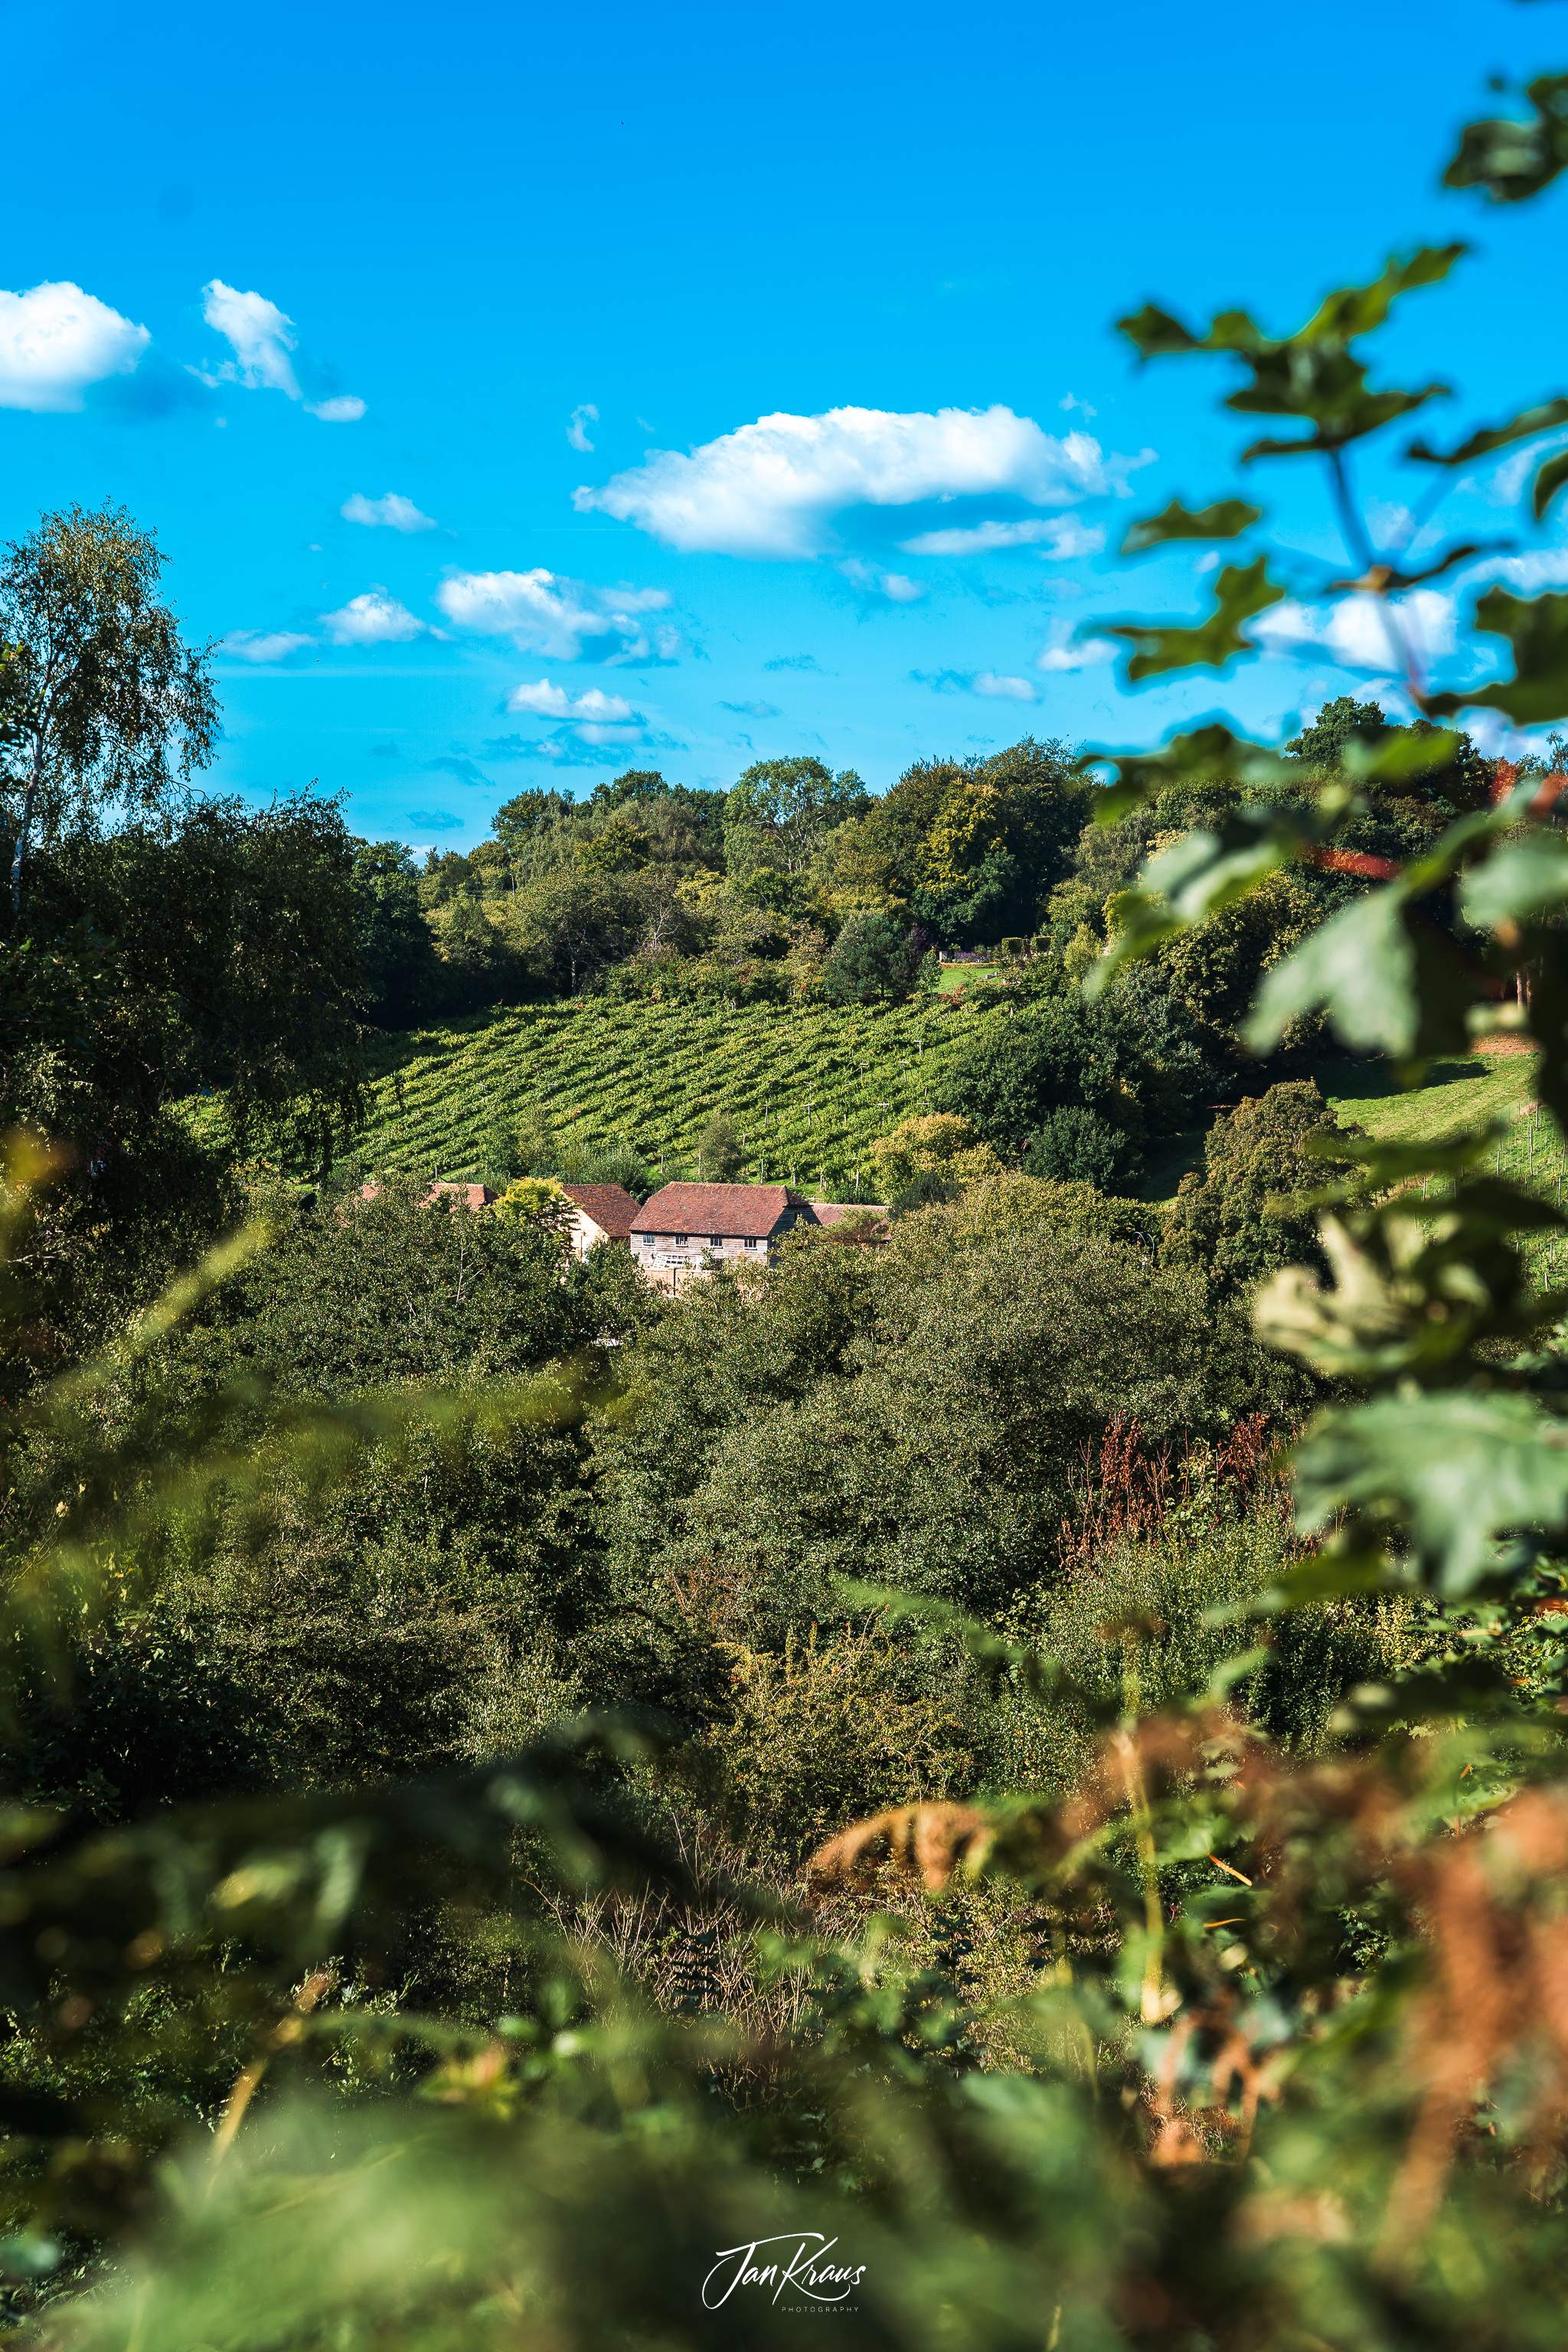 Views of Sanden Vineyard estate, East Sussex, England, UK